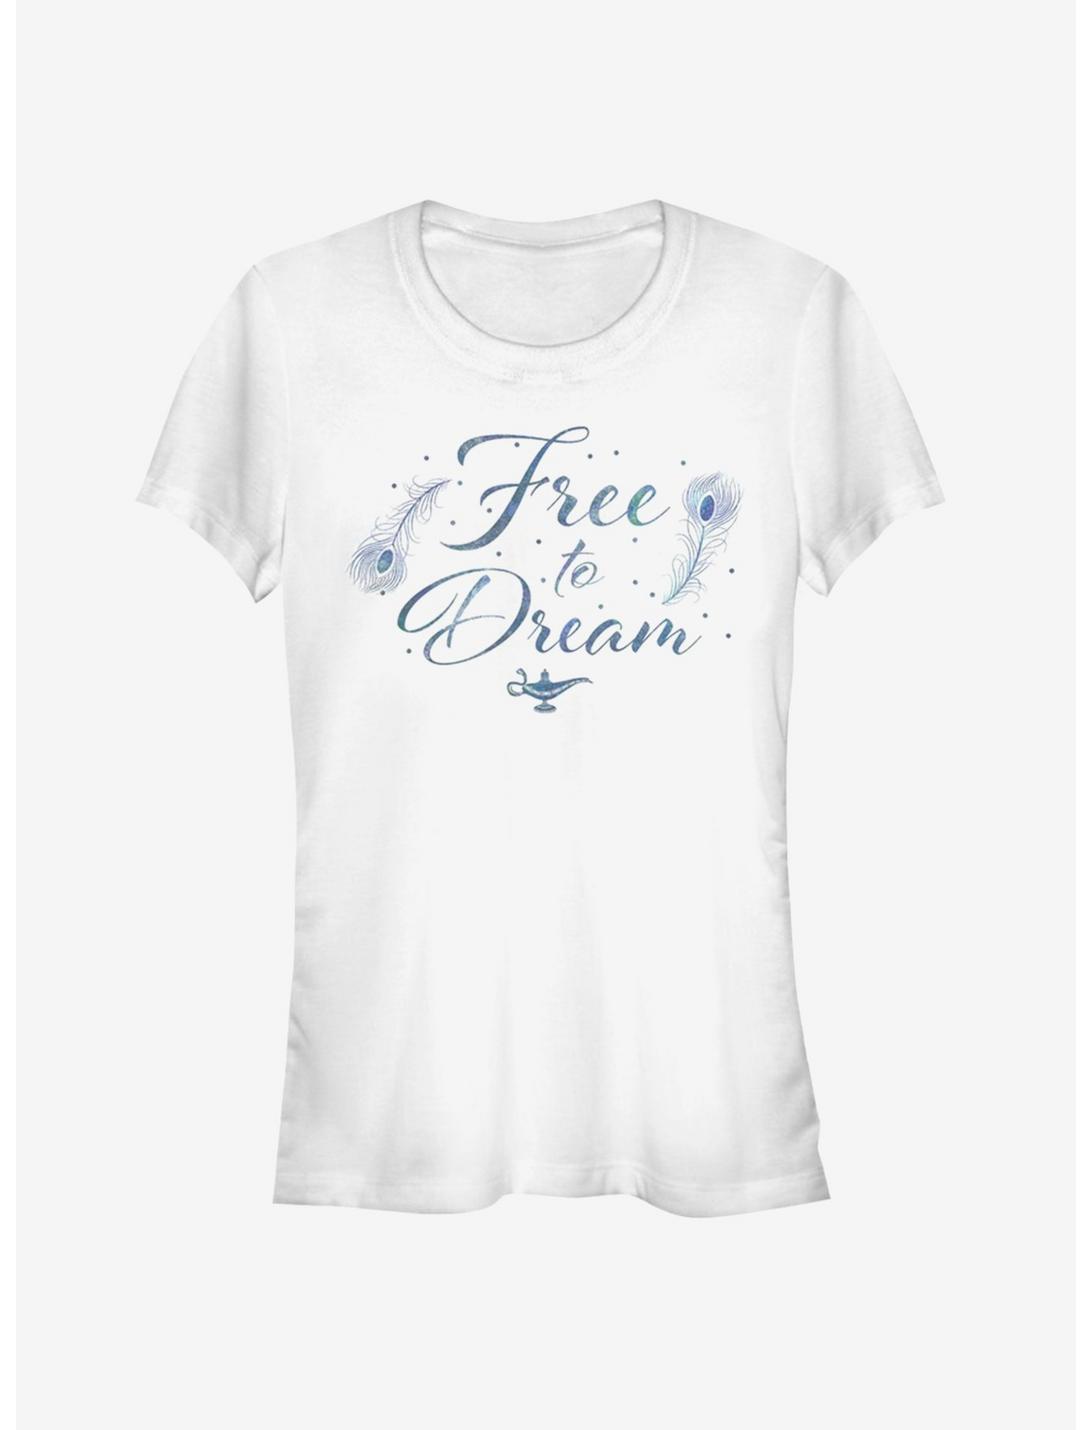 Disney Aladdin 2019 Free To Dream Girls T-Shirt, WHITE, hi-res